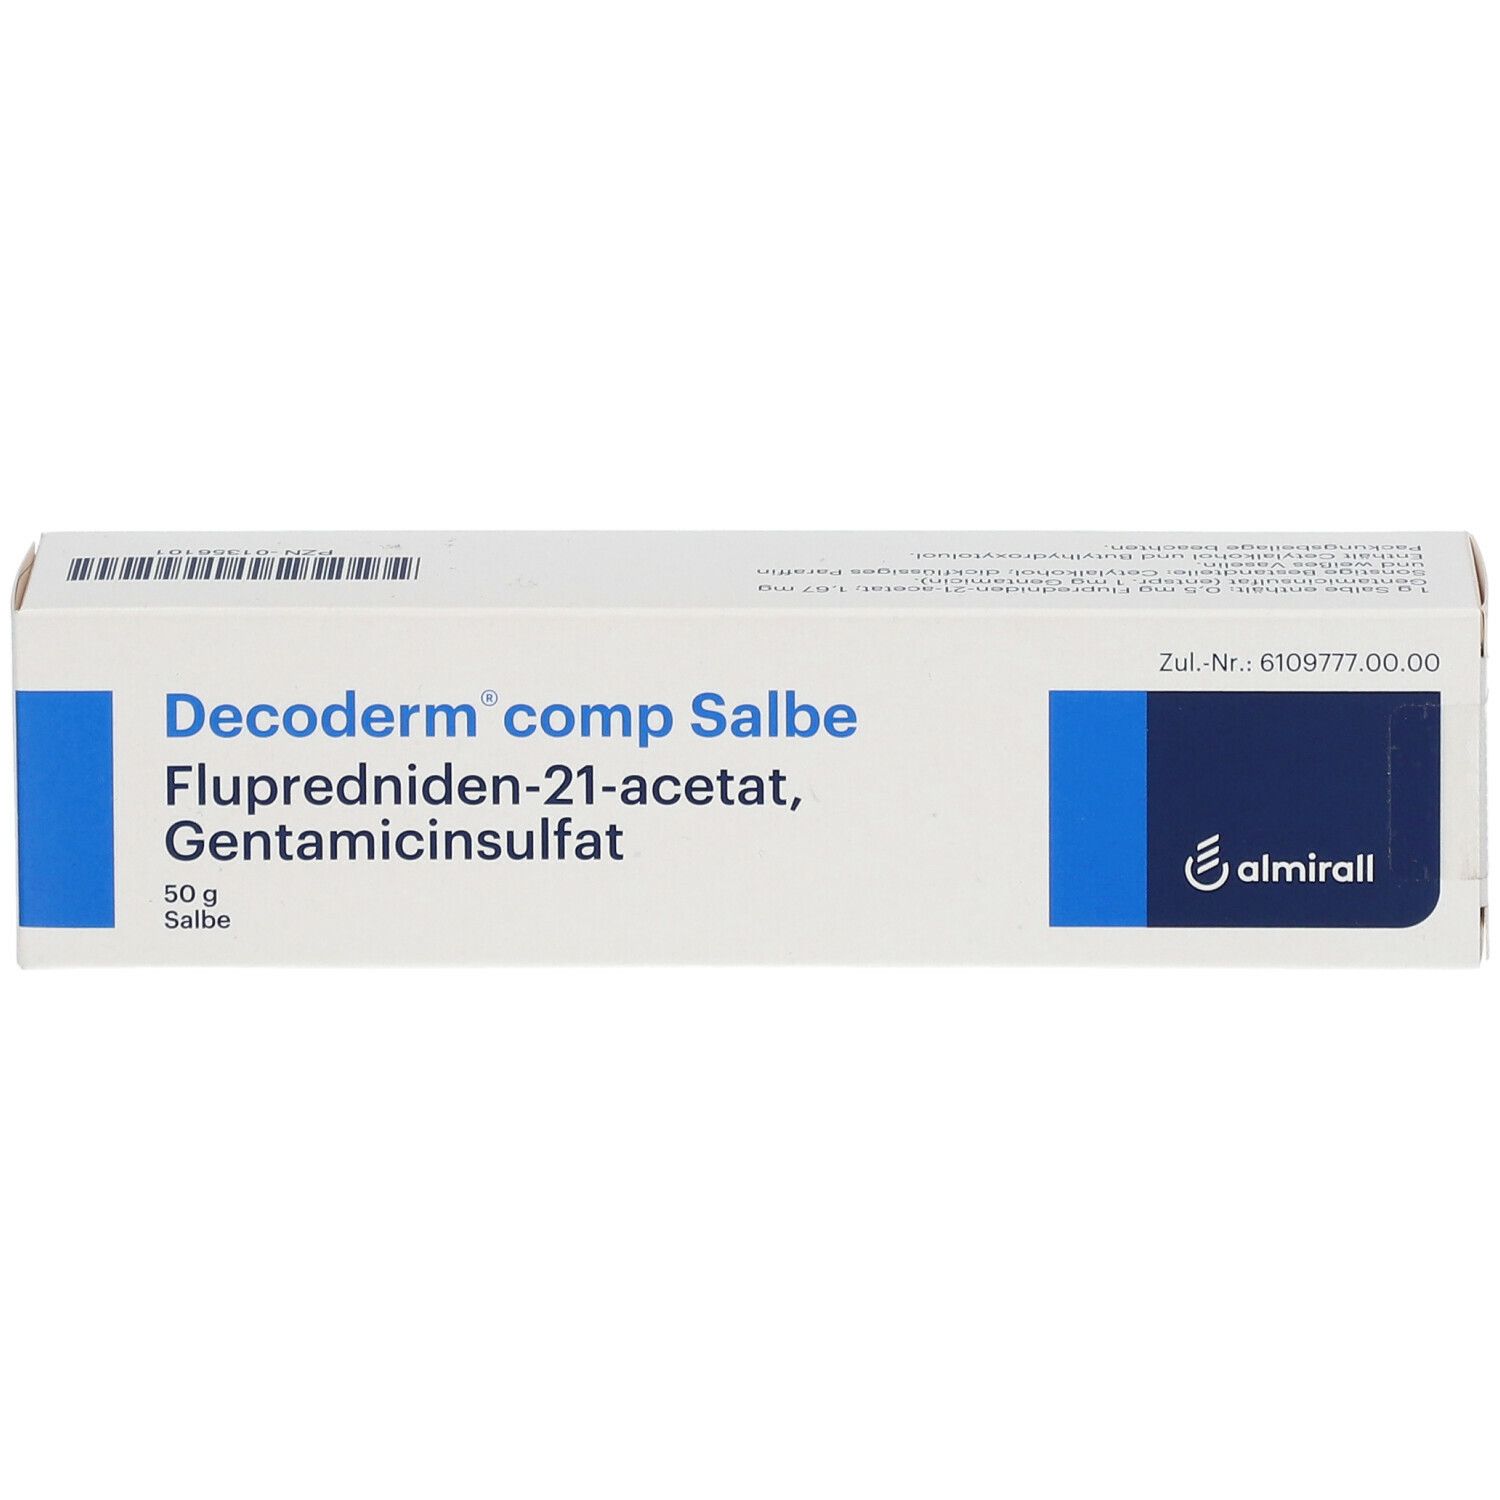 Decoderm® comp Salbe